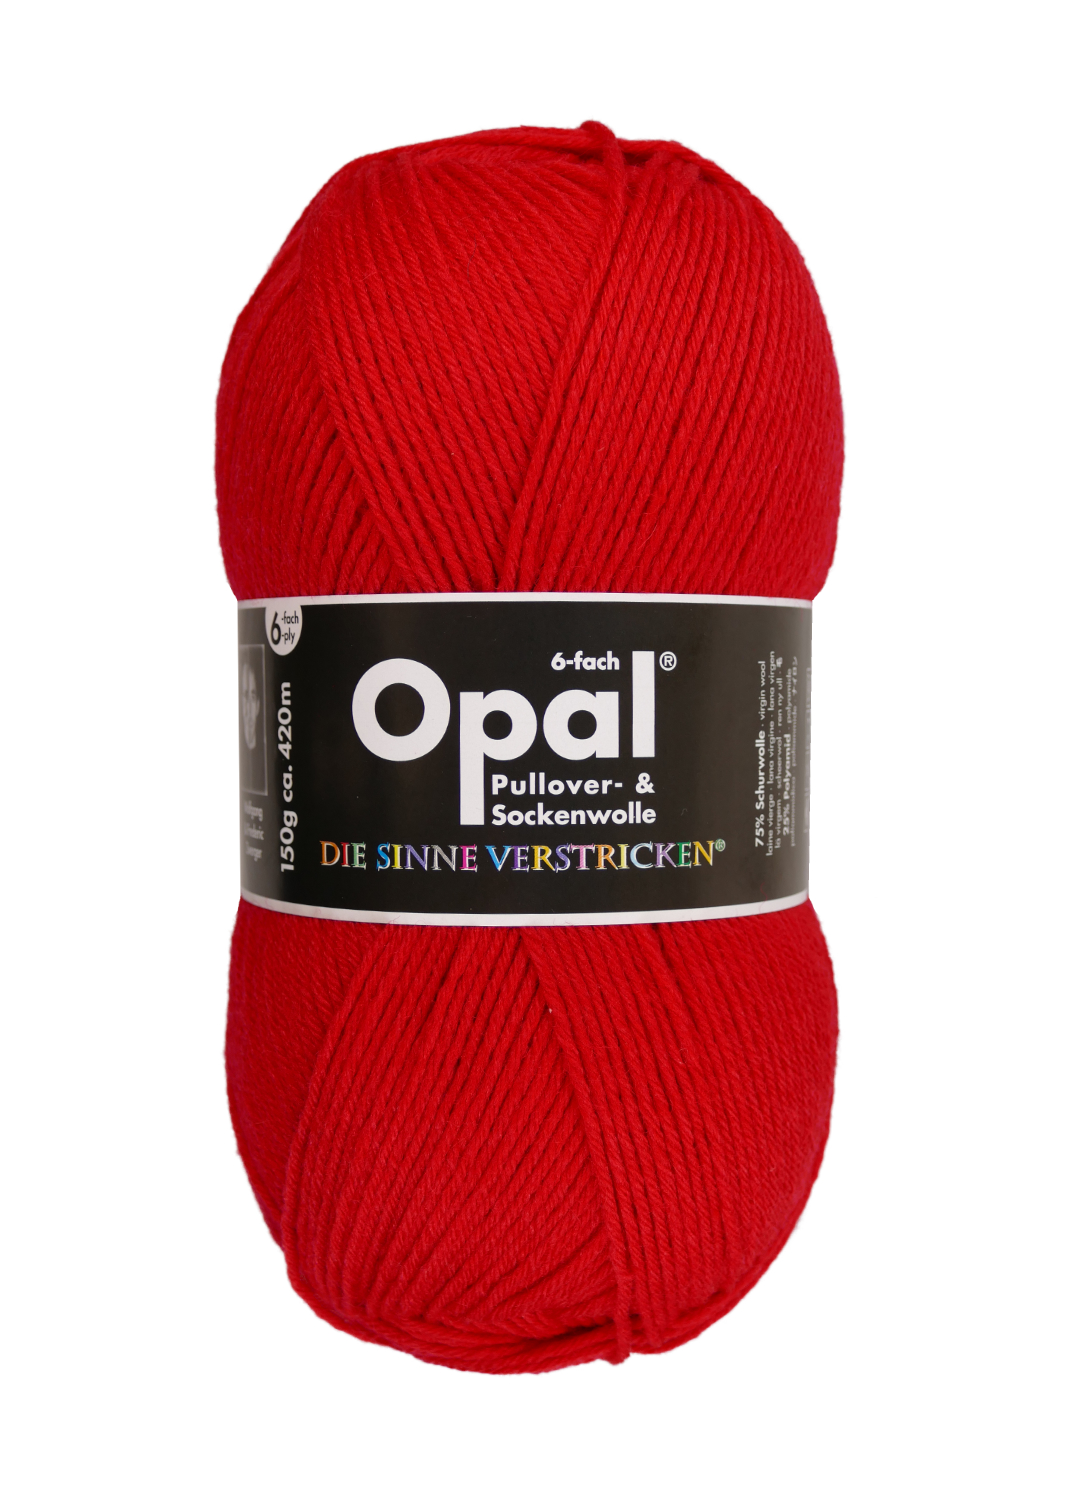 OPAL Uni - 6-fach Sockenwolle 7900 - rot